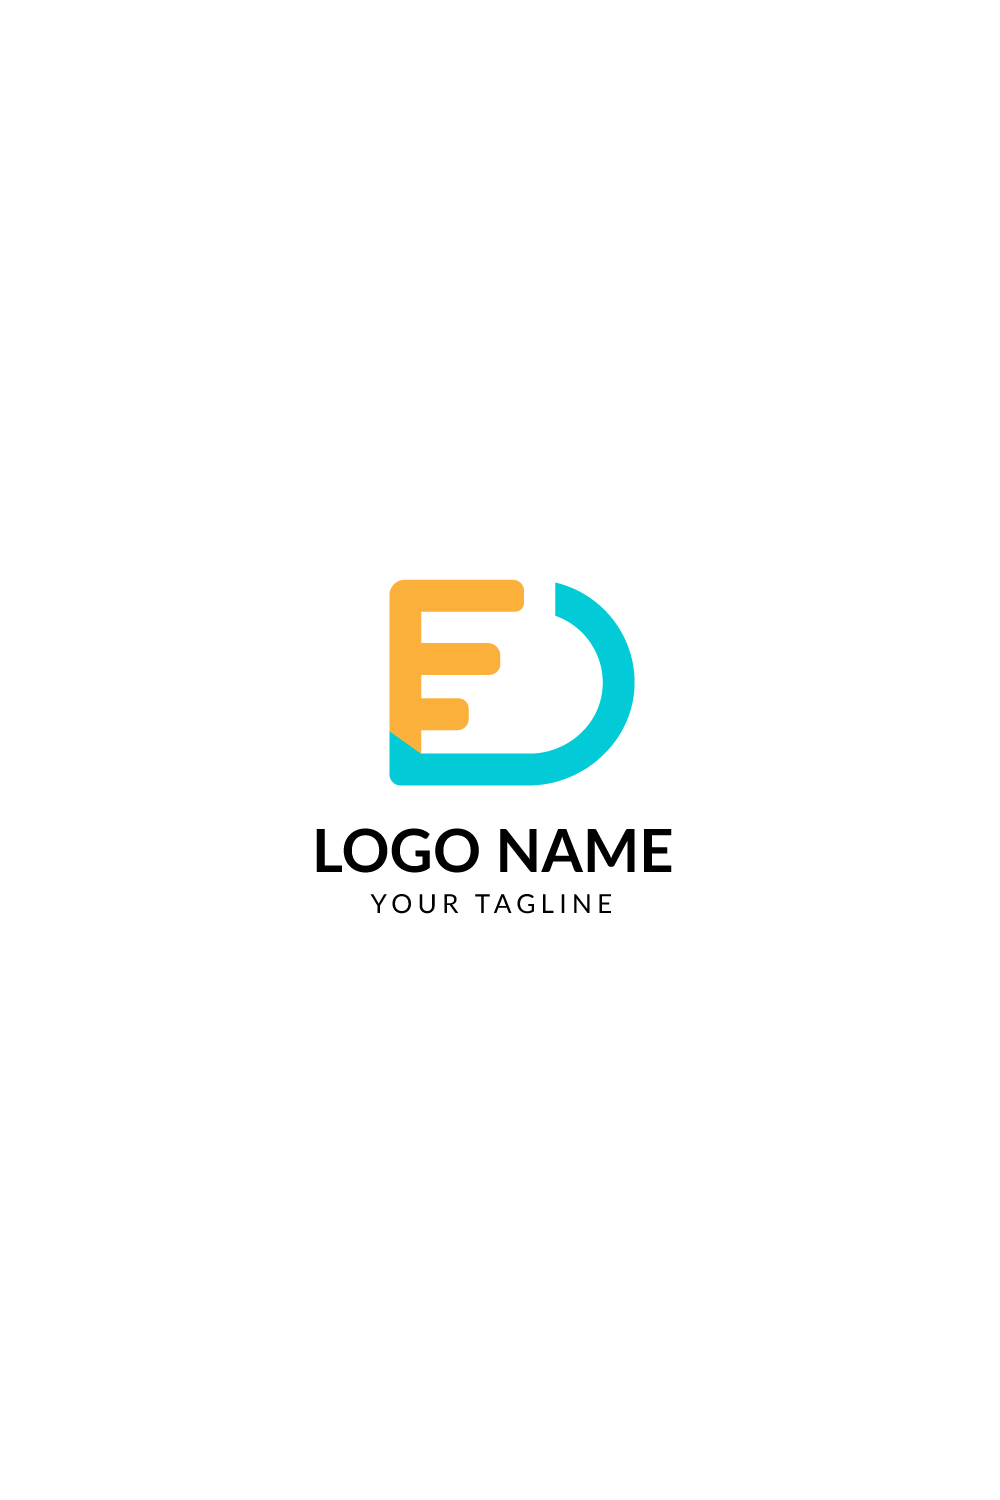 D letter logo design pinterest preview image.